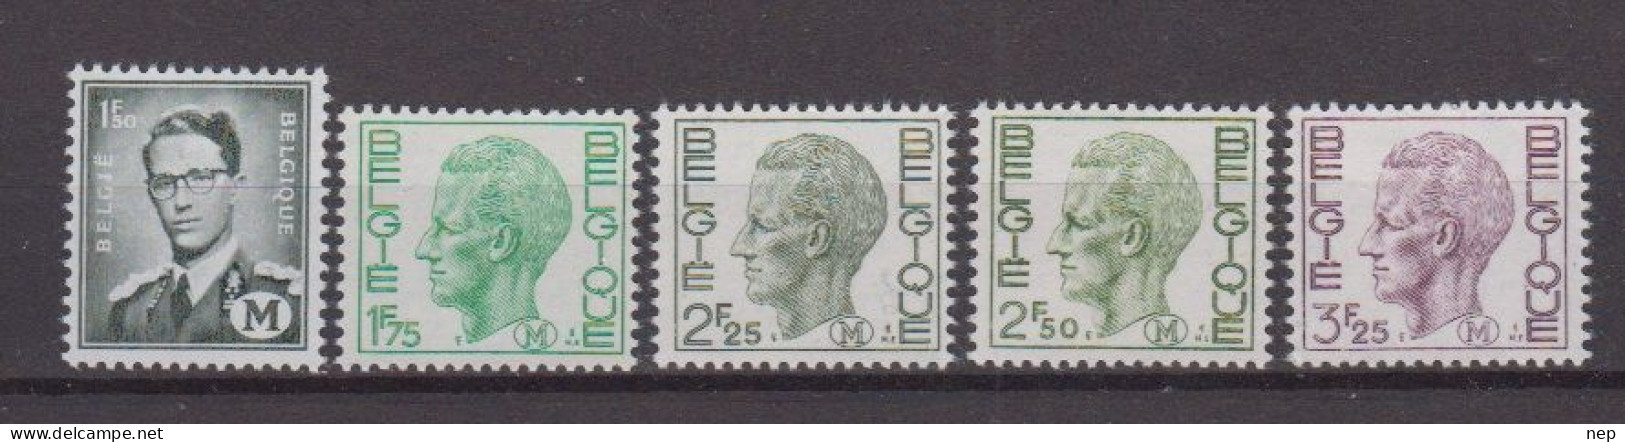 BELGIË - OBP - 1967/75 - M1/5 - MNH** - Stamps [M]